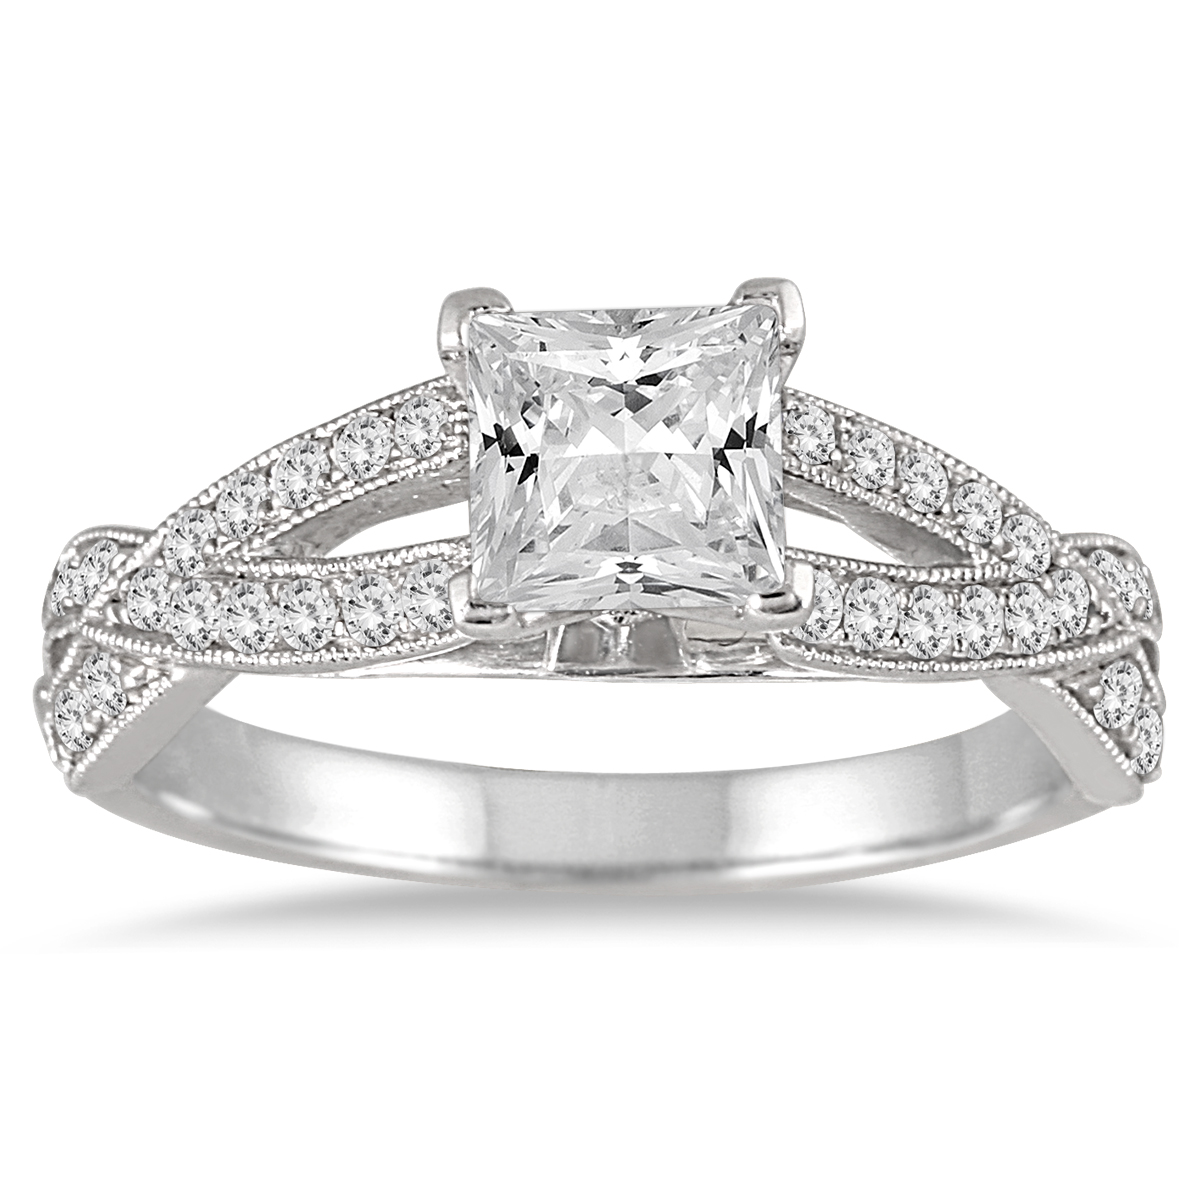 szul.com 1 1/3 Carat TW Princess Cut Diamond Ring in 14K White Gold